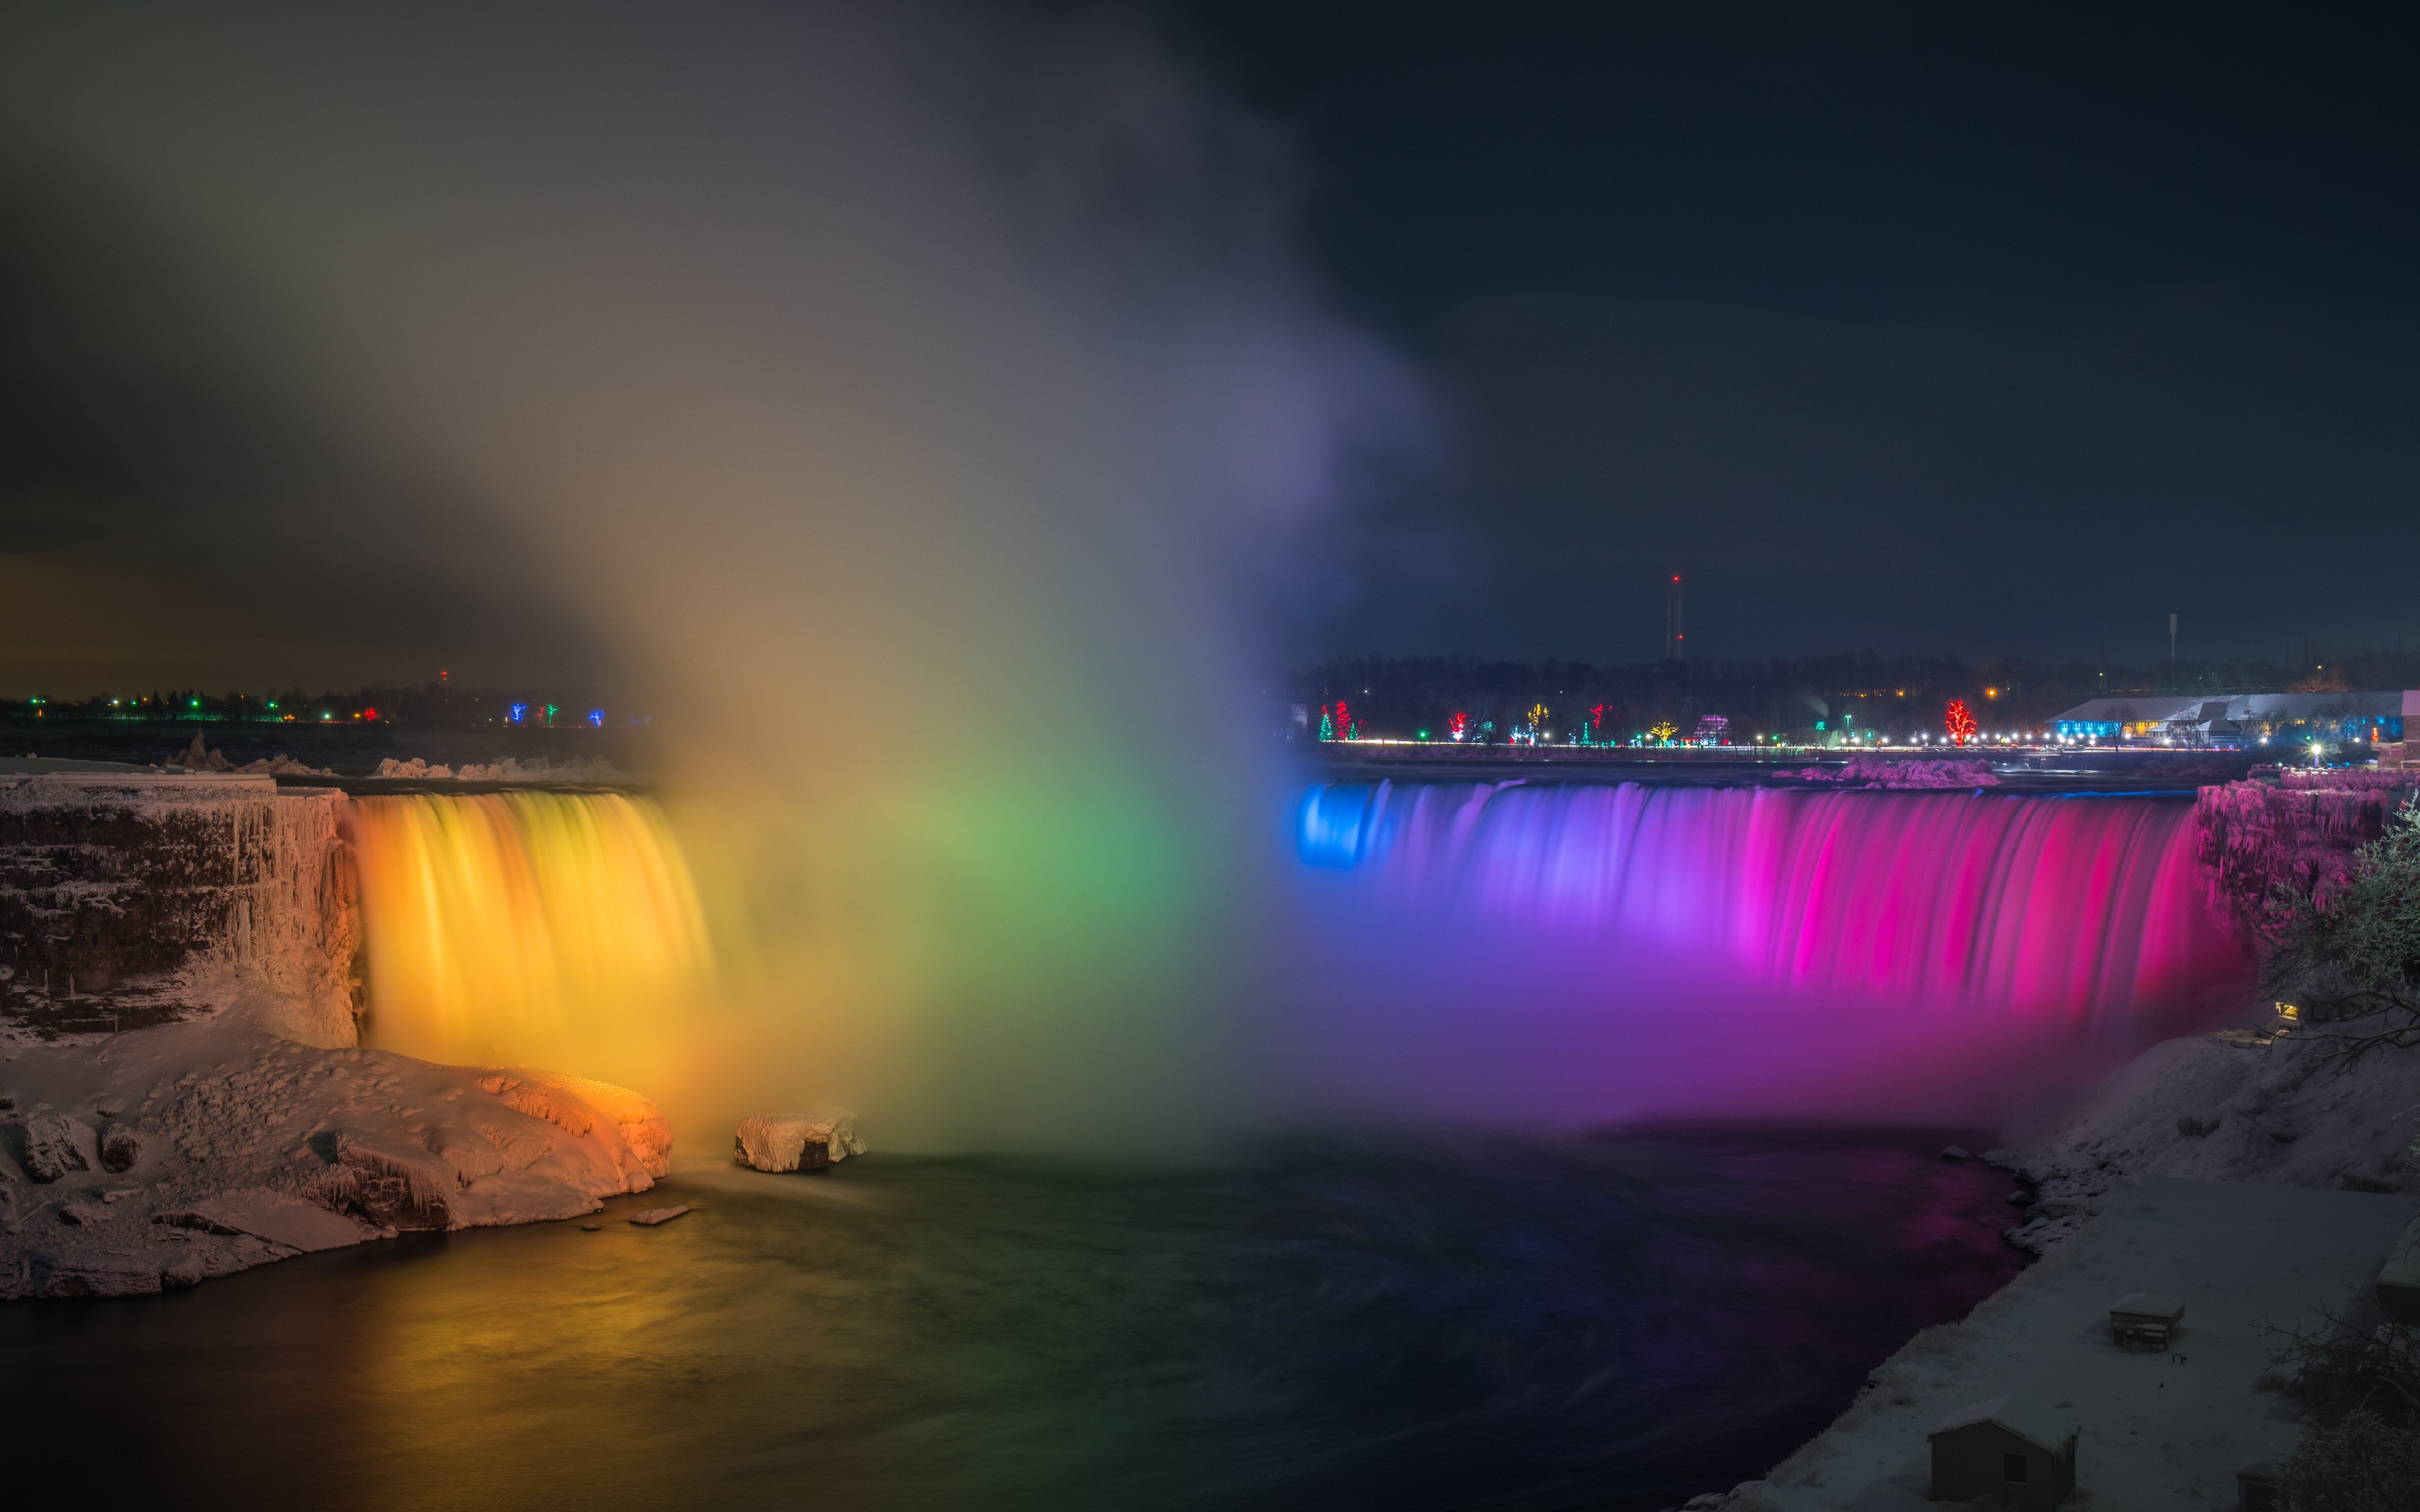 Download wallpaper: Rainbow over Niagara Falls 5120x3200